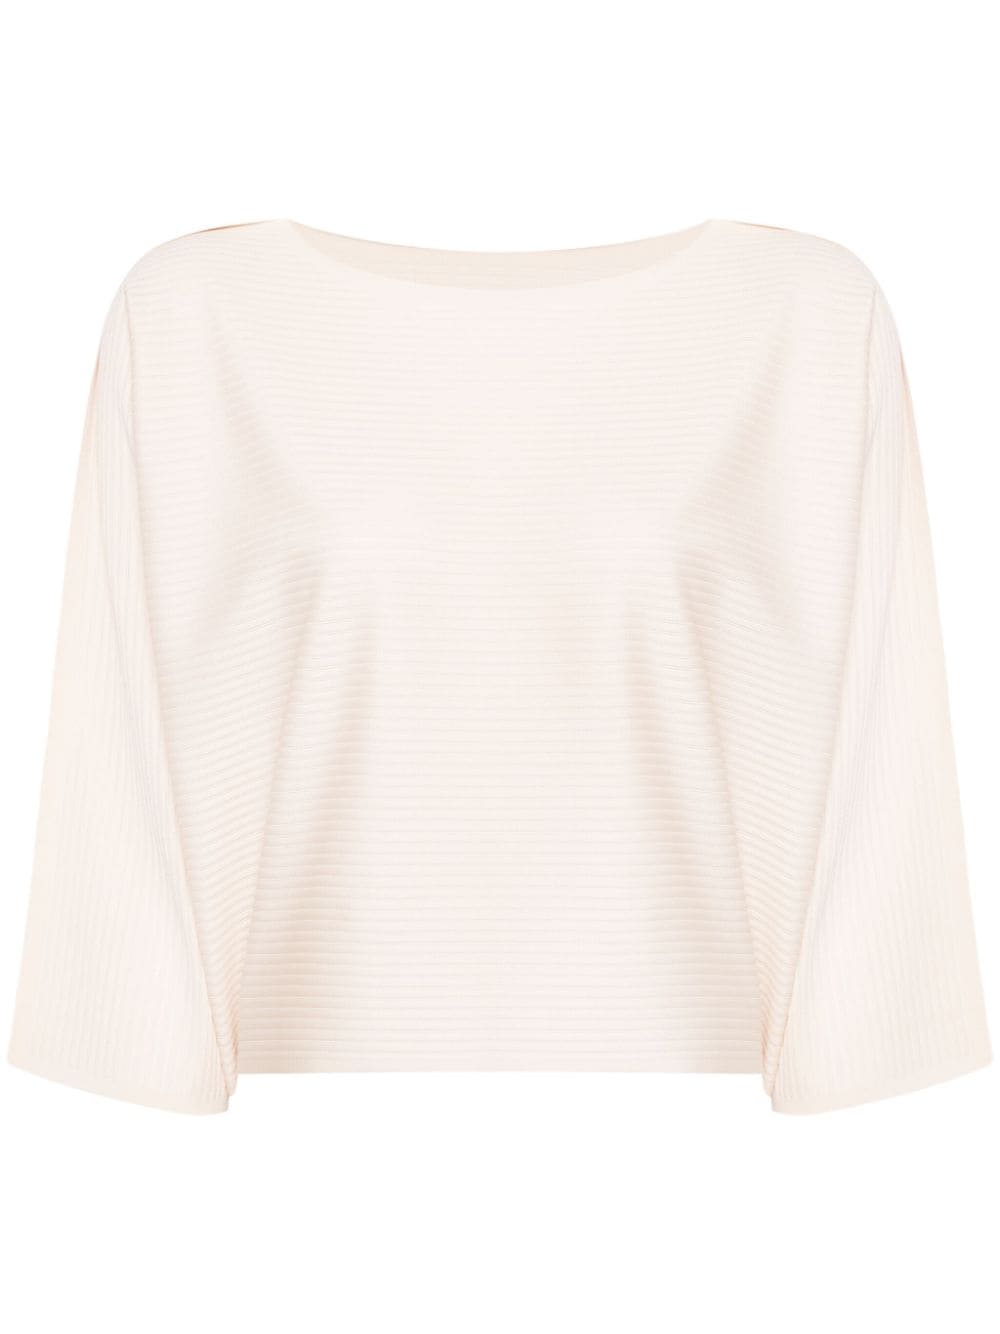 A-Poc pleated blouse